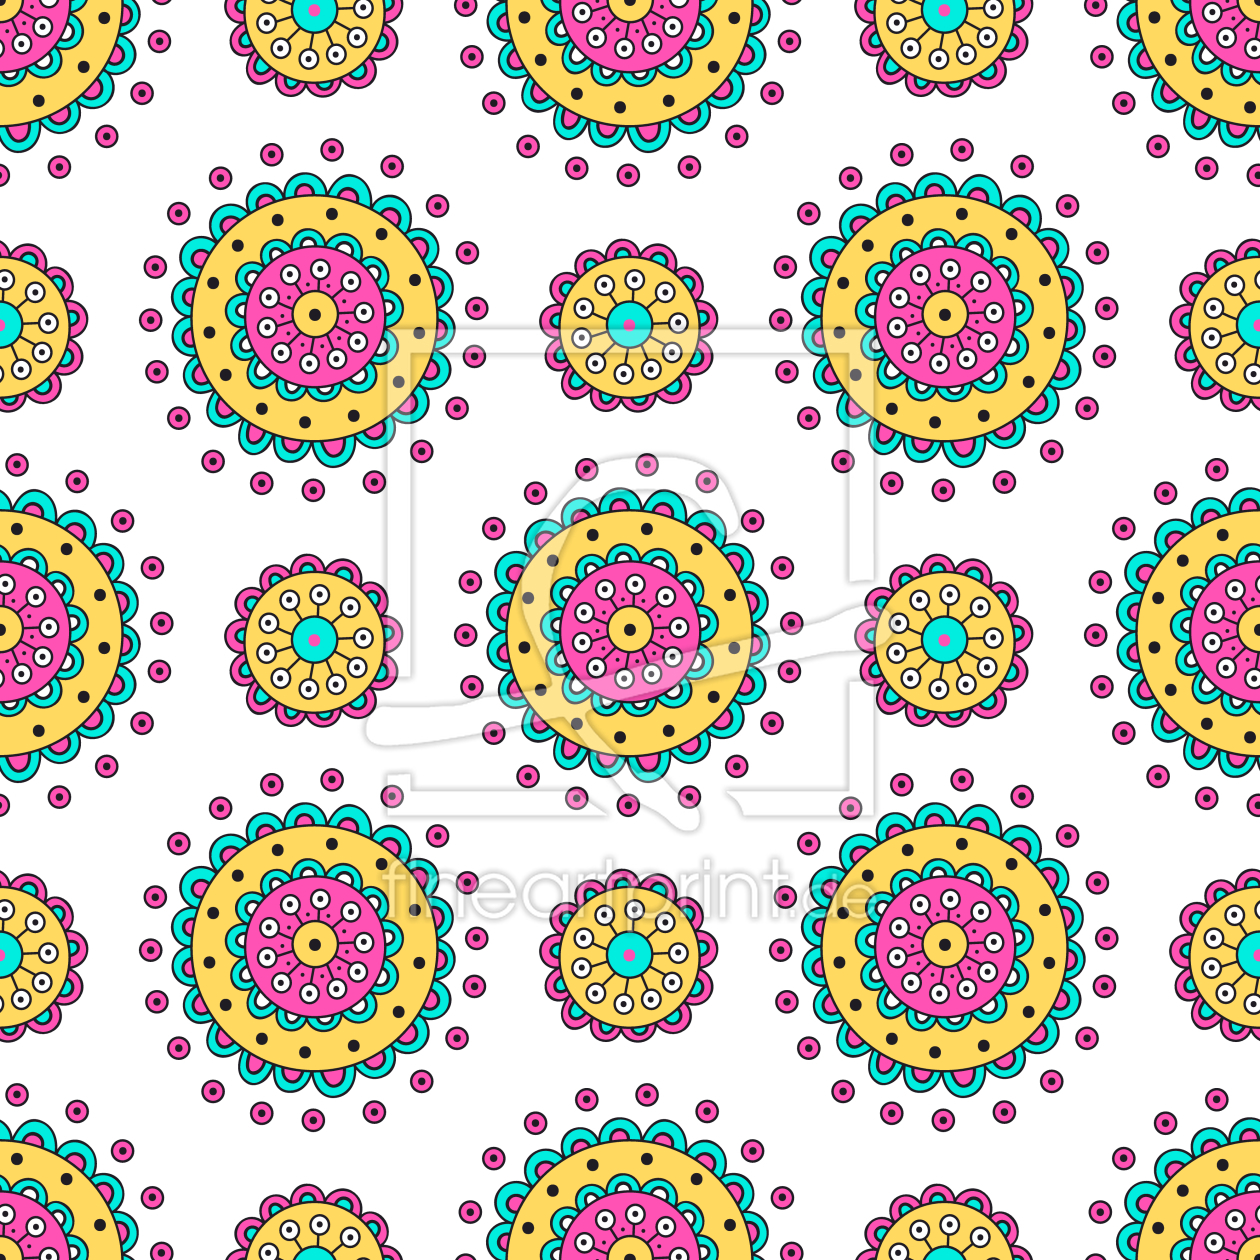 Bild-Nr.: 9013477 Doodle-Mandalas erstellt von patterndesigns-com